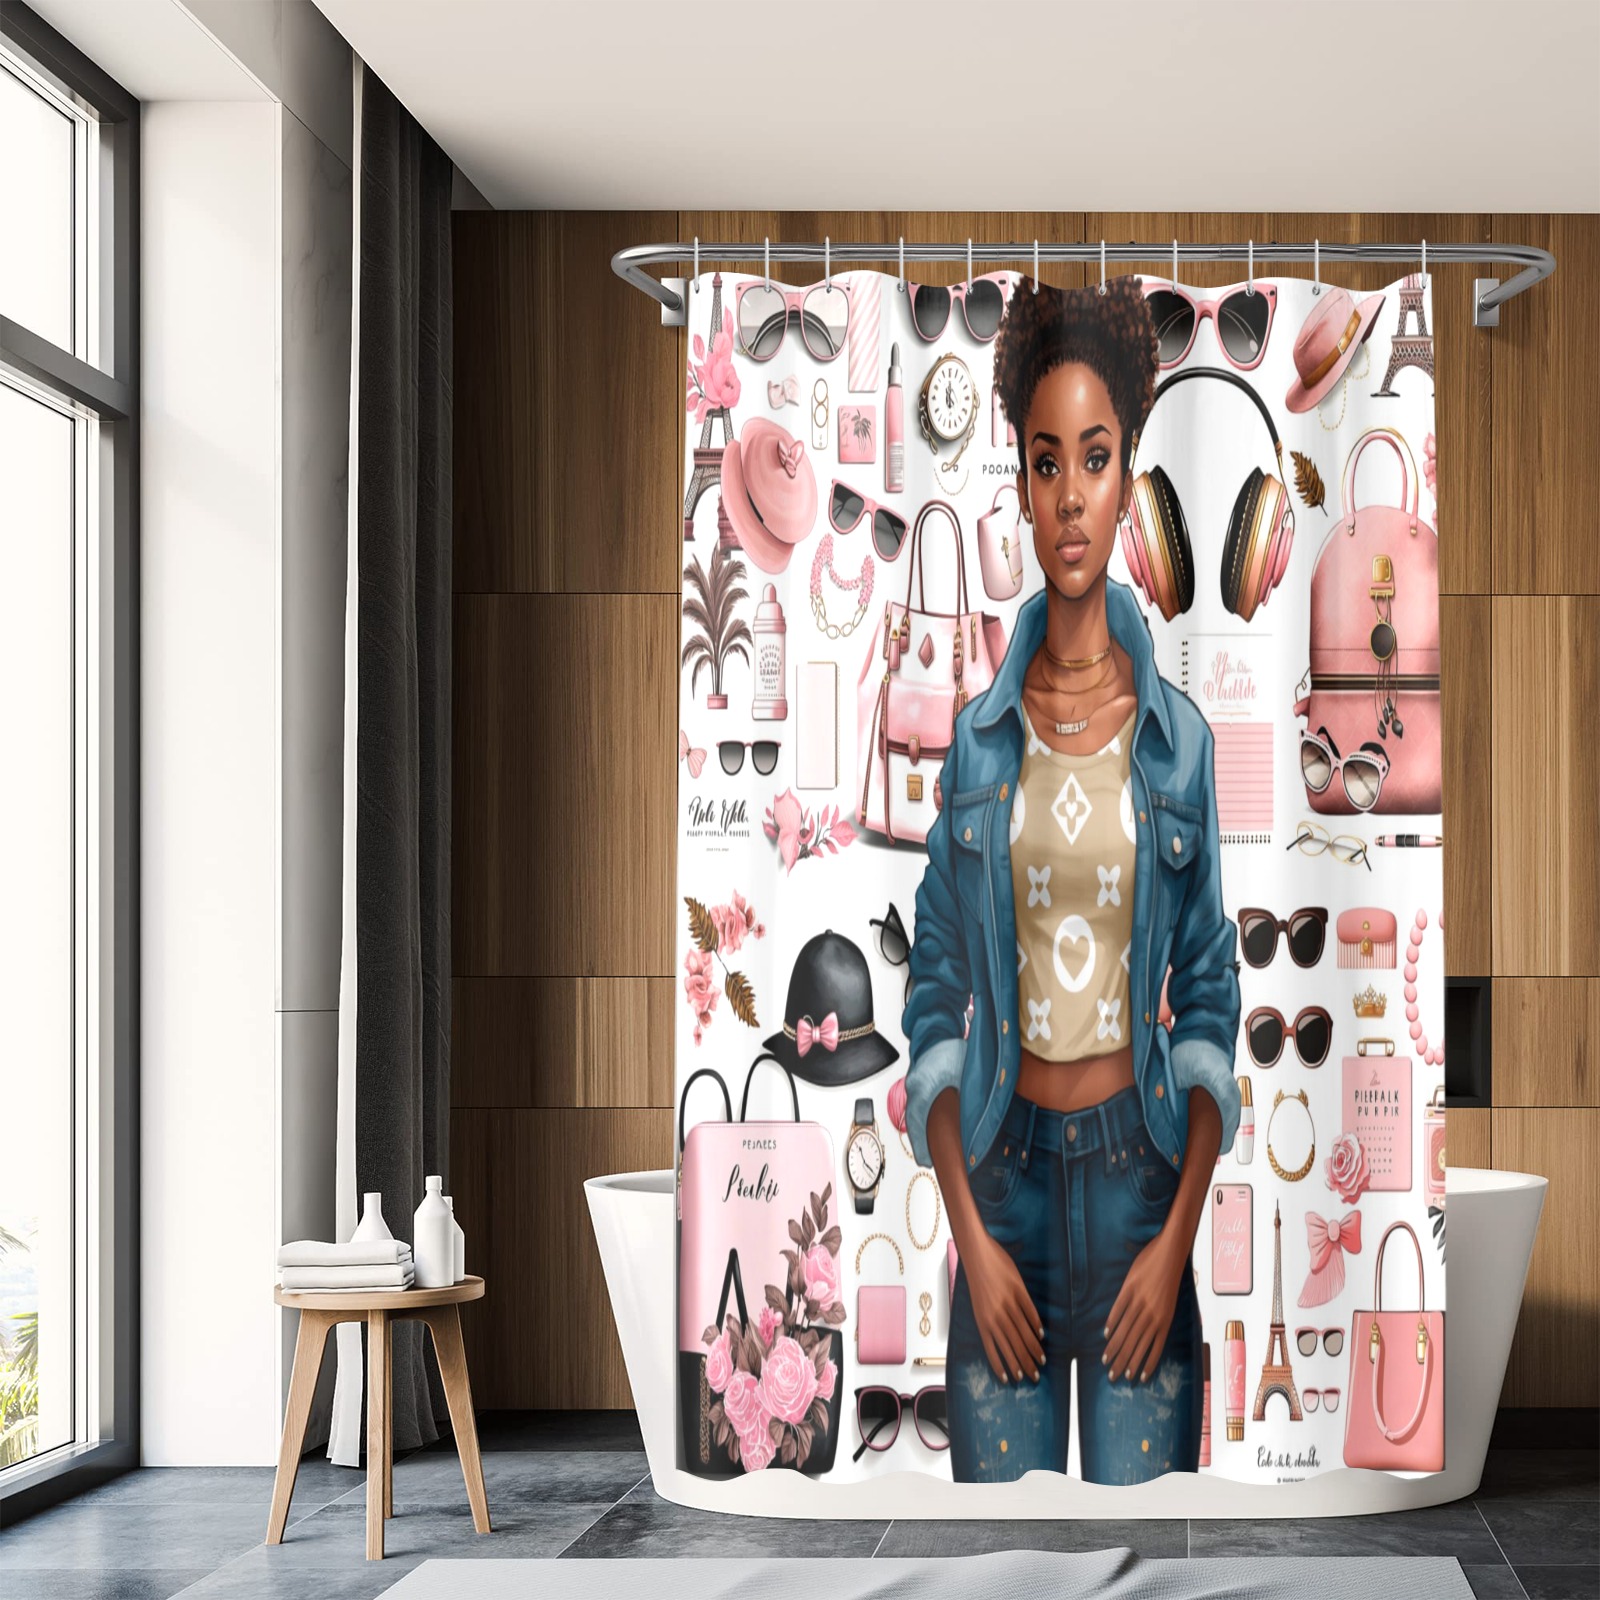 Fashion Black Girl   - Milan Templates - Rose Shower Curtain 69"x72"